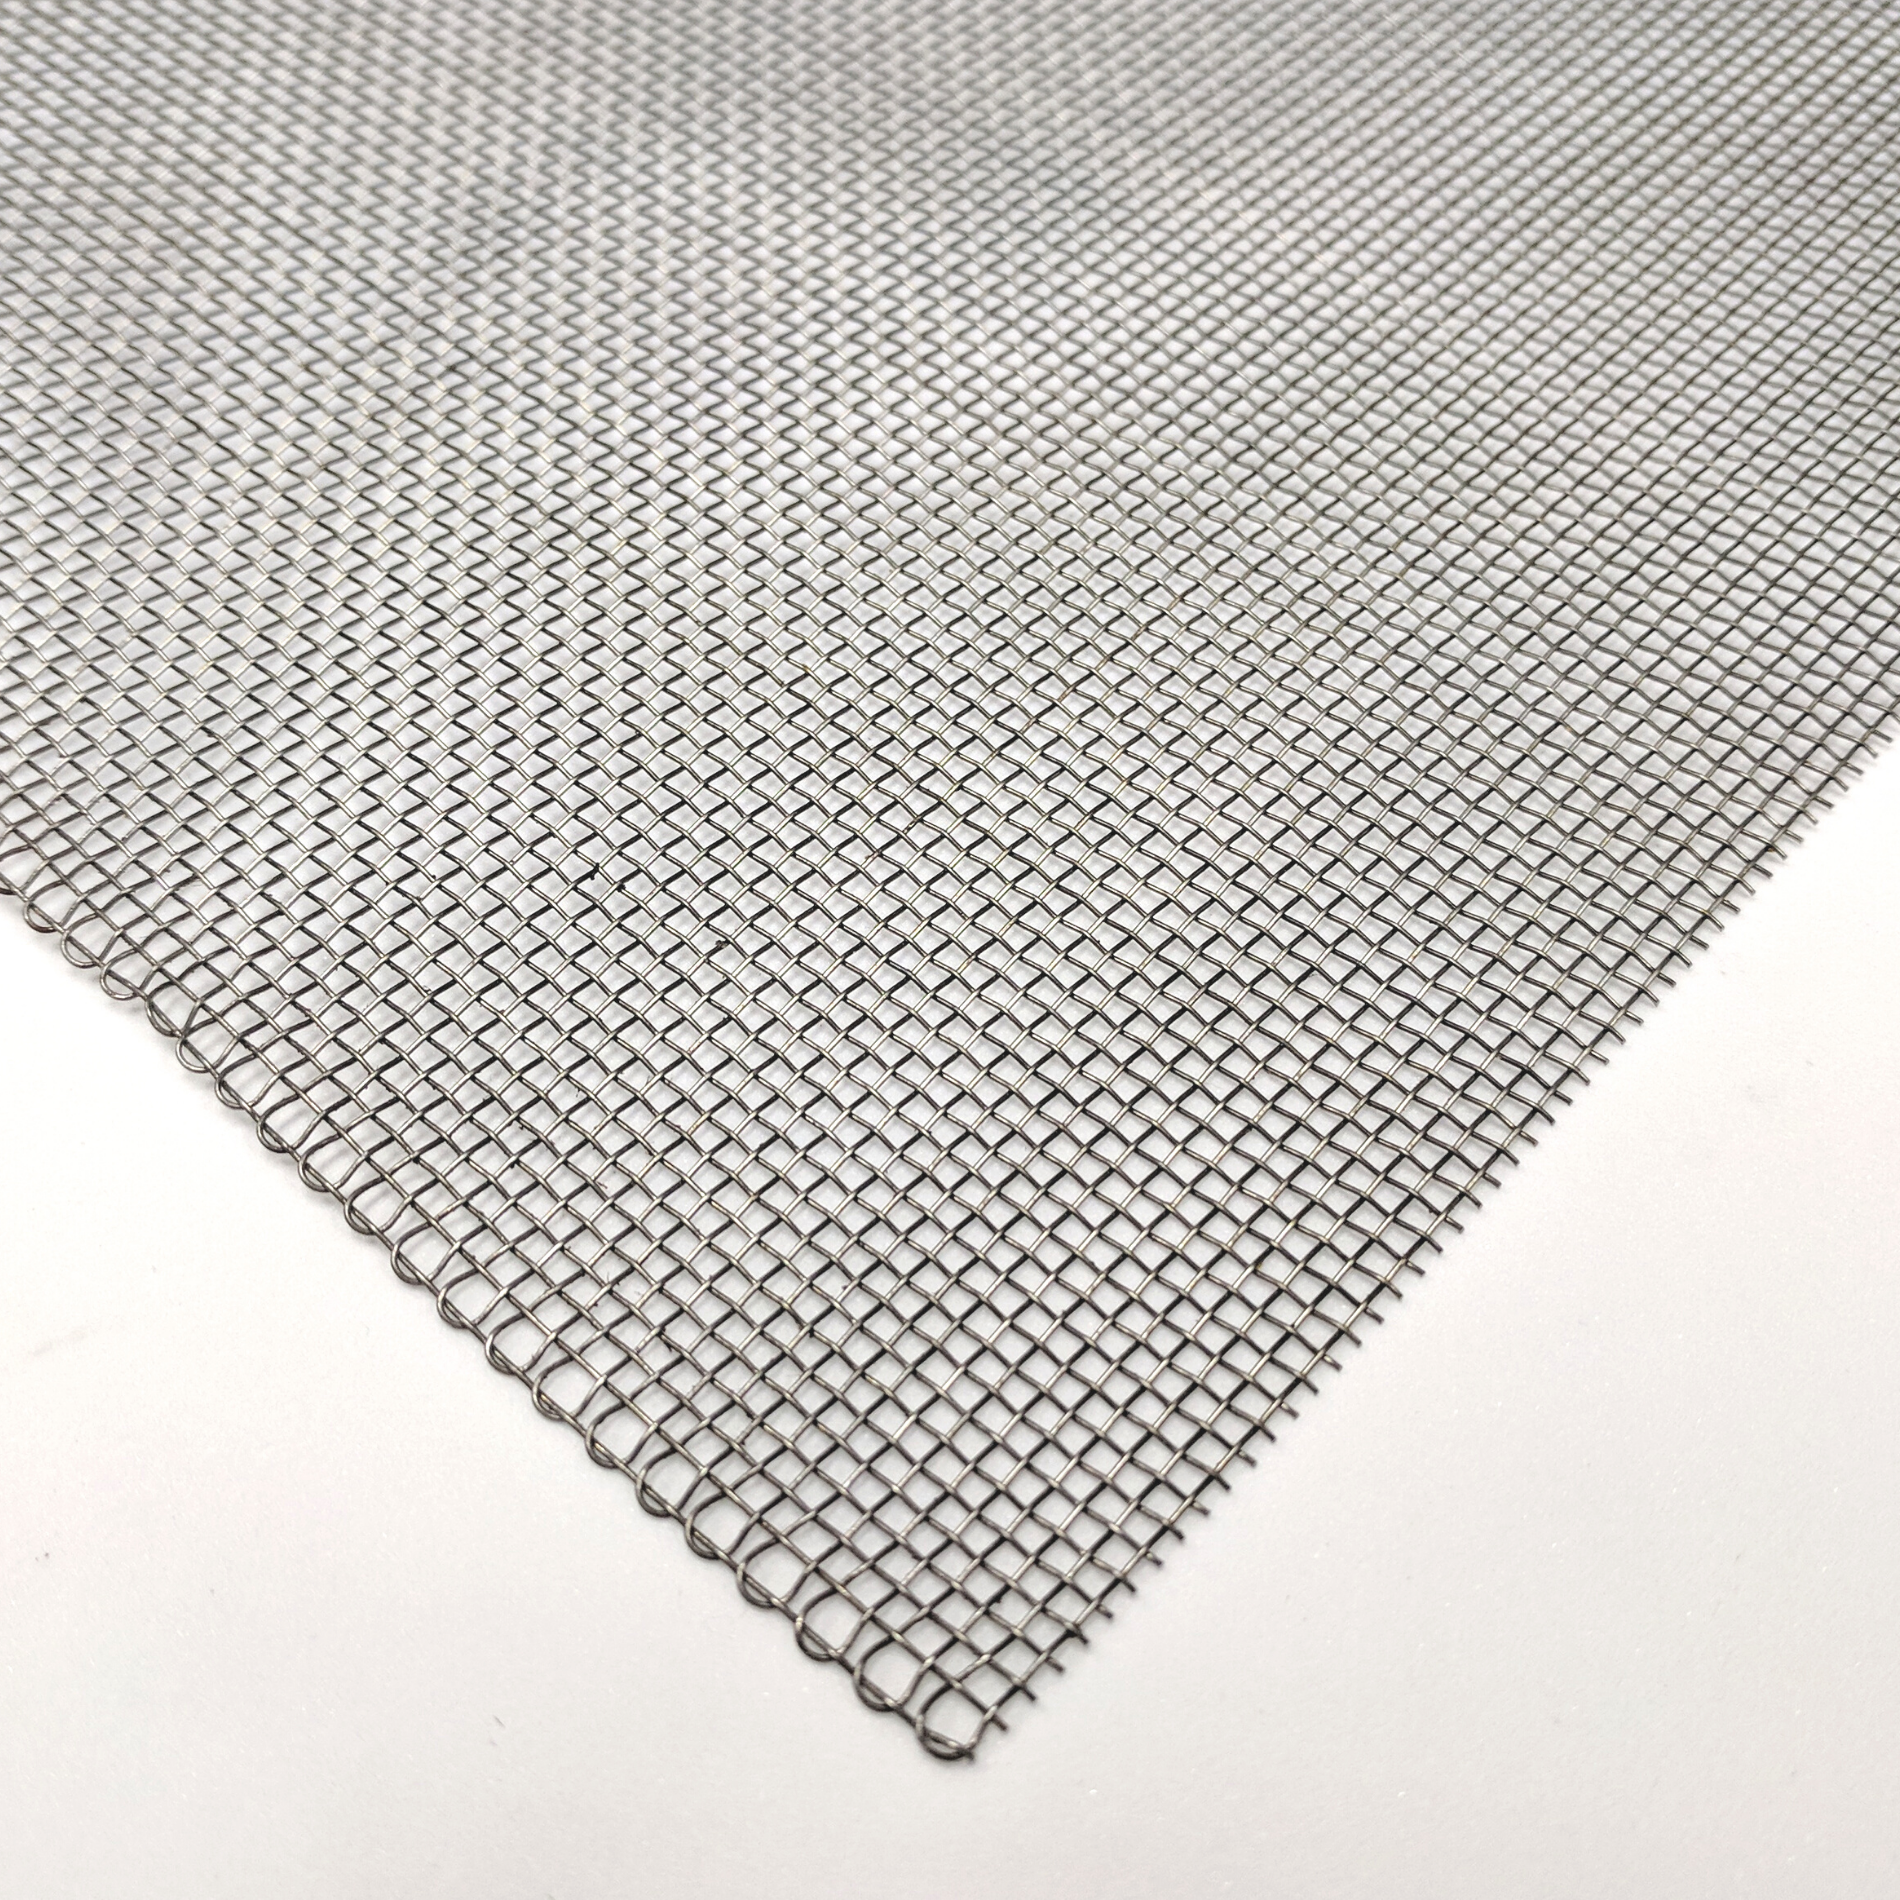 carbon steel - plain steel 12 mesh